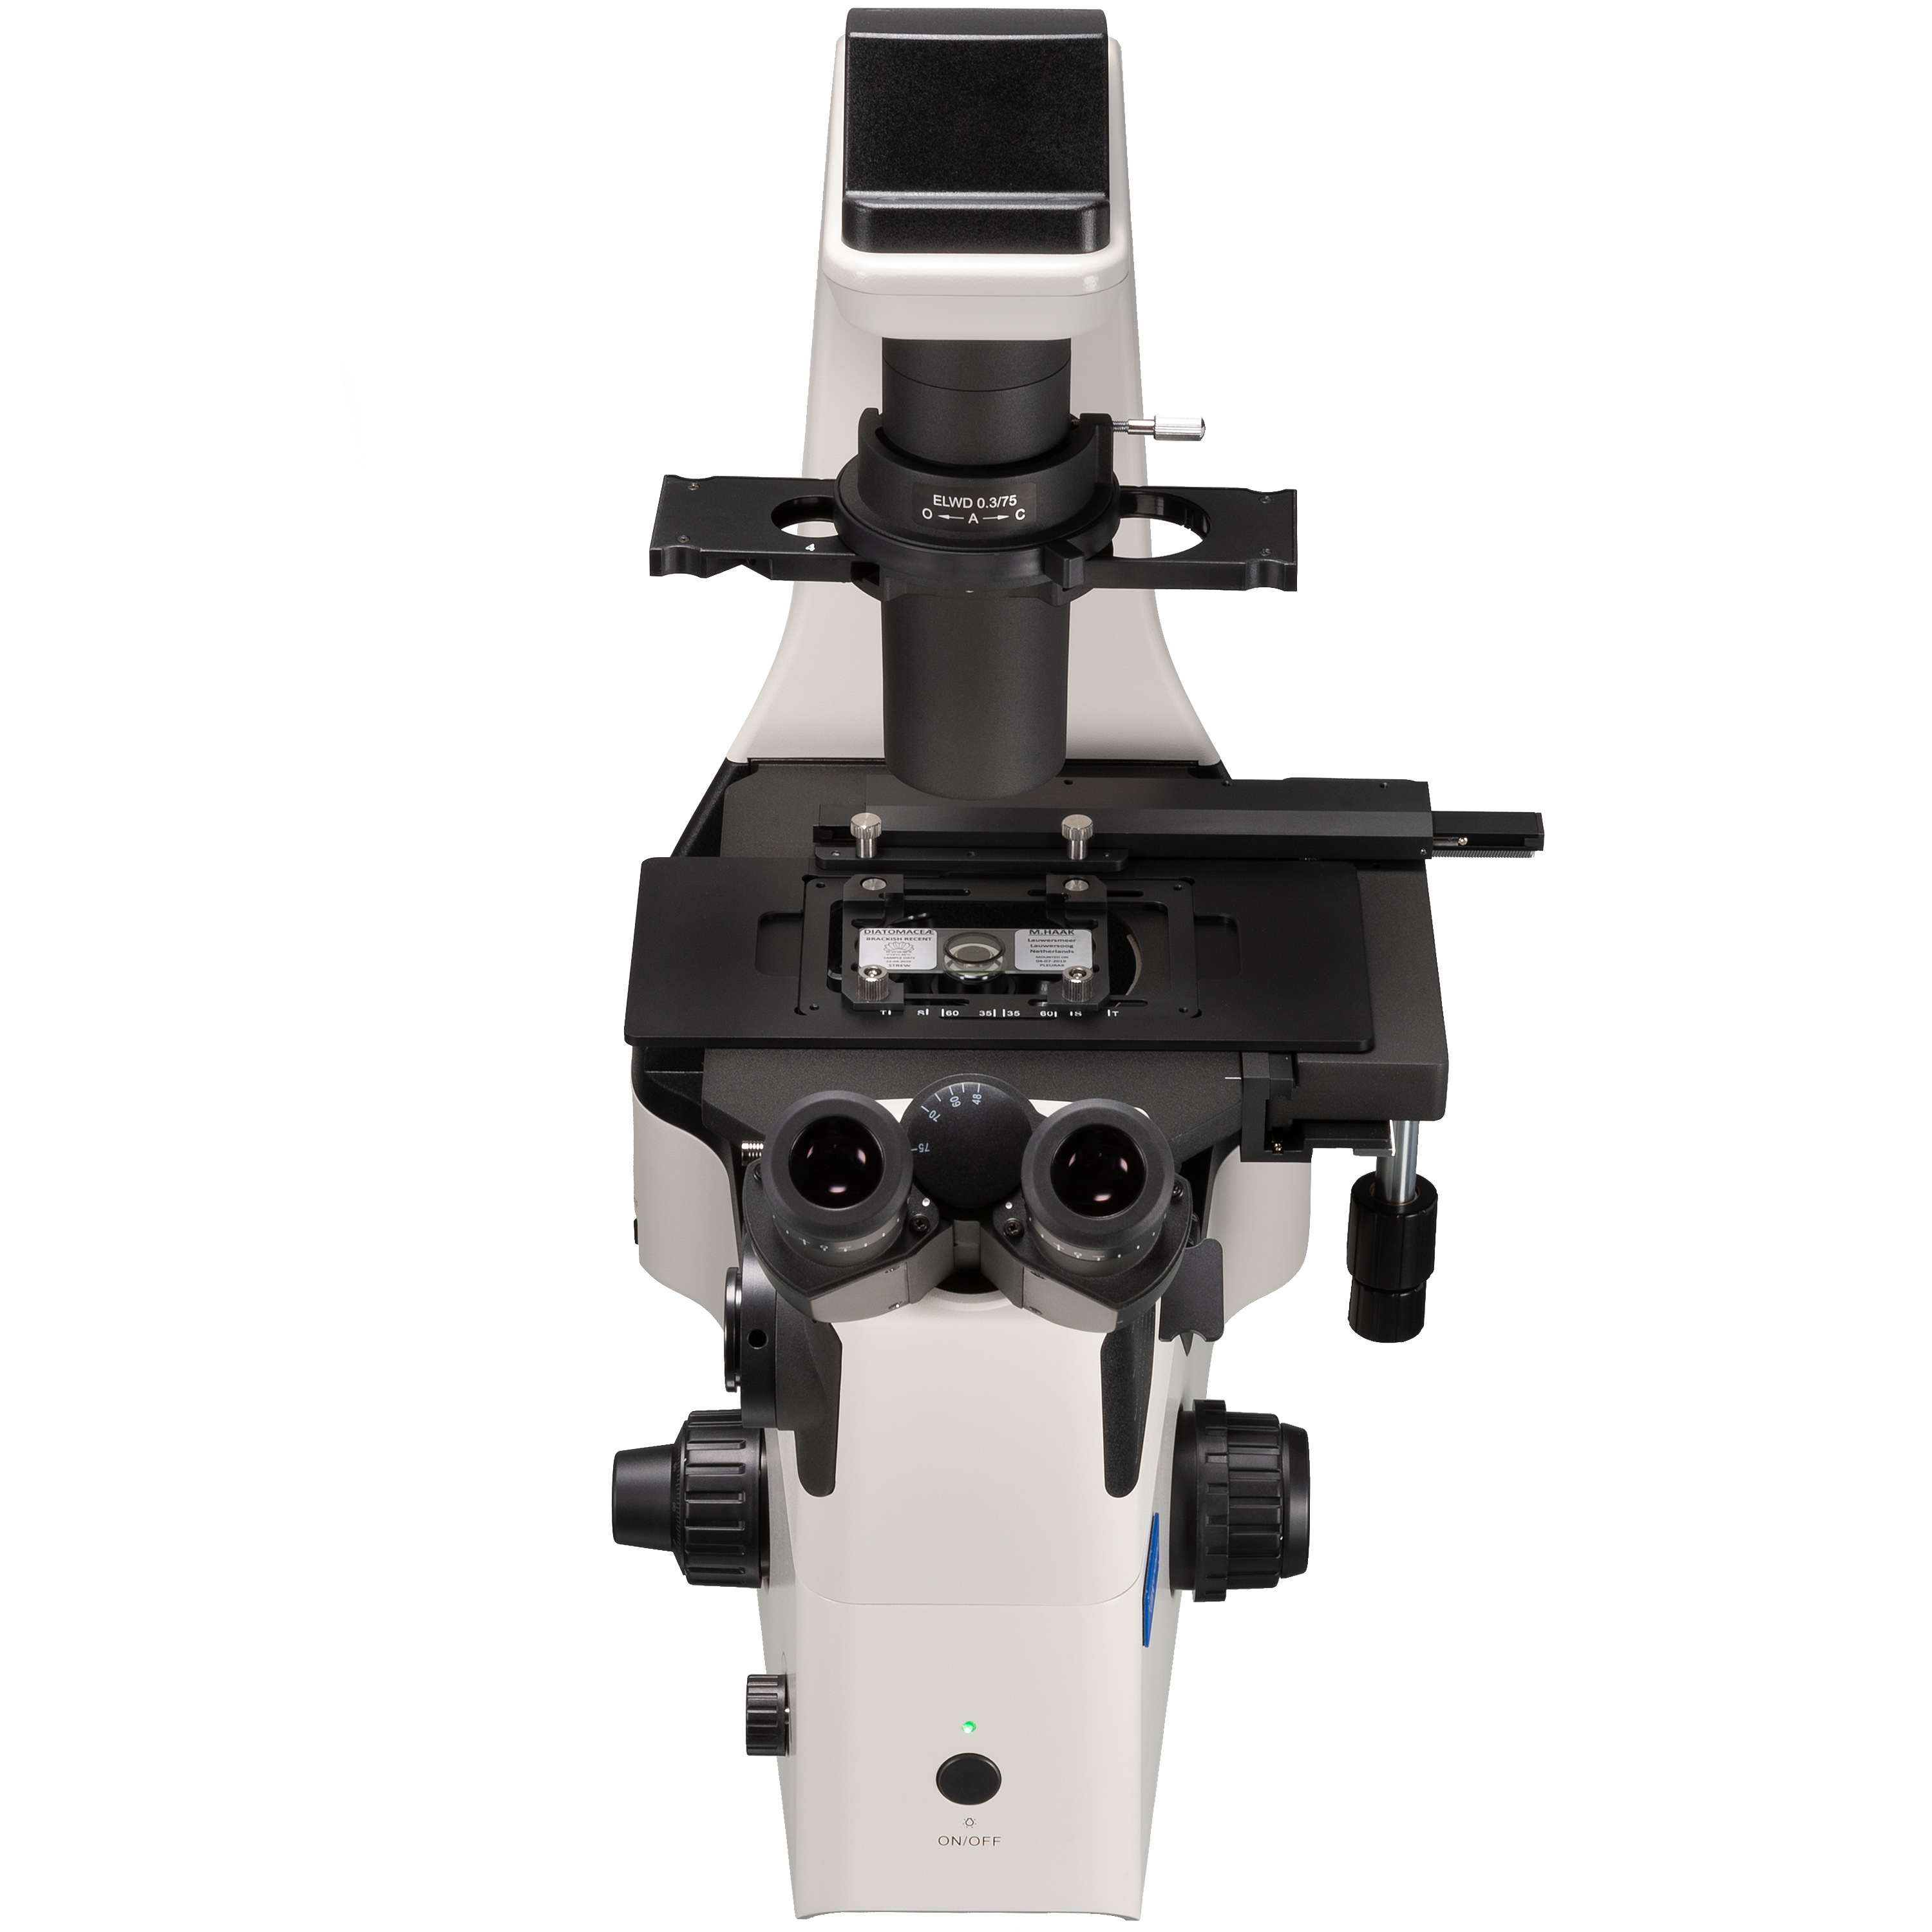 Nexcope NIB610 professional inverted laboratory microscope